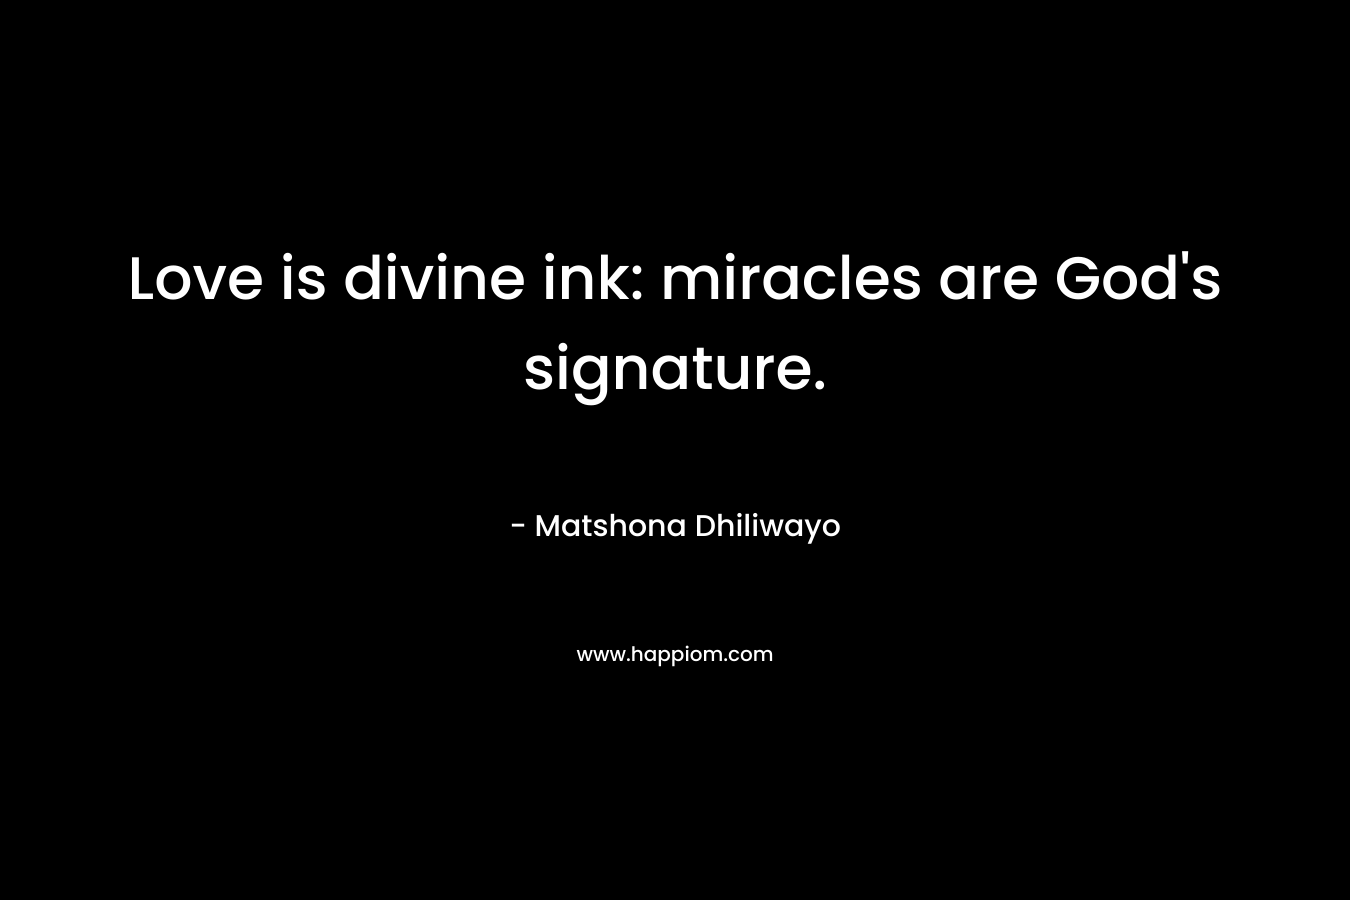 Love is divine ink: miracles are God’s signature. – Matshona Dhiliwayo